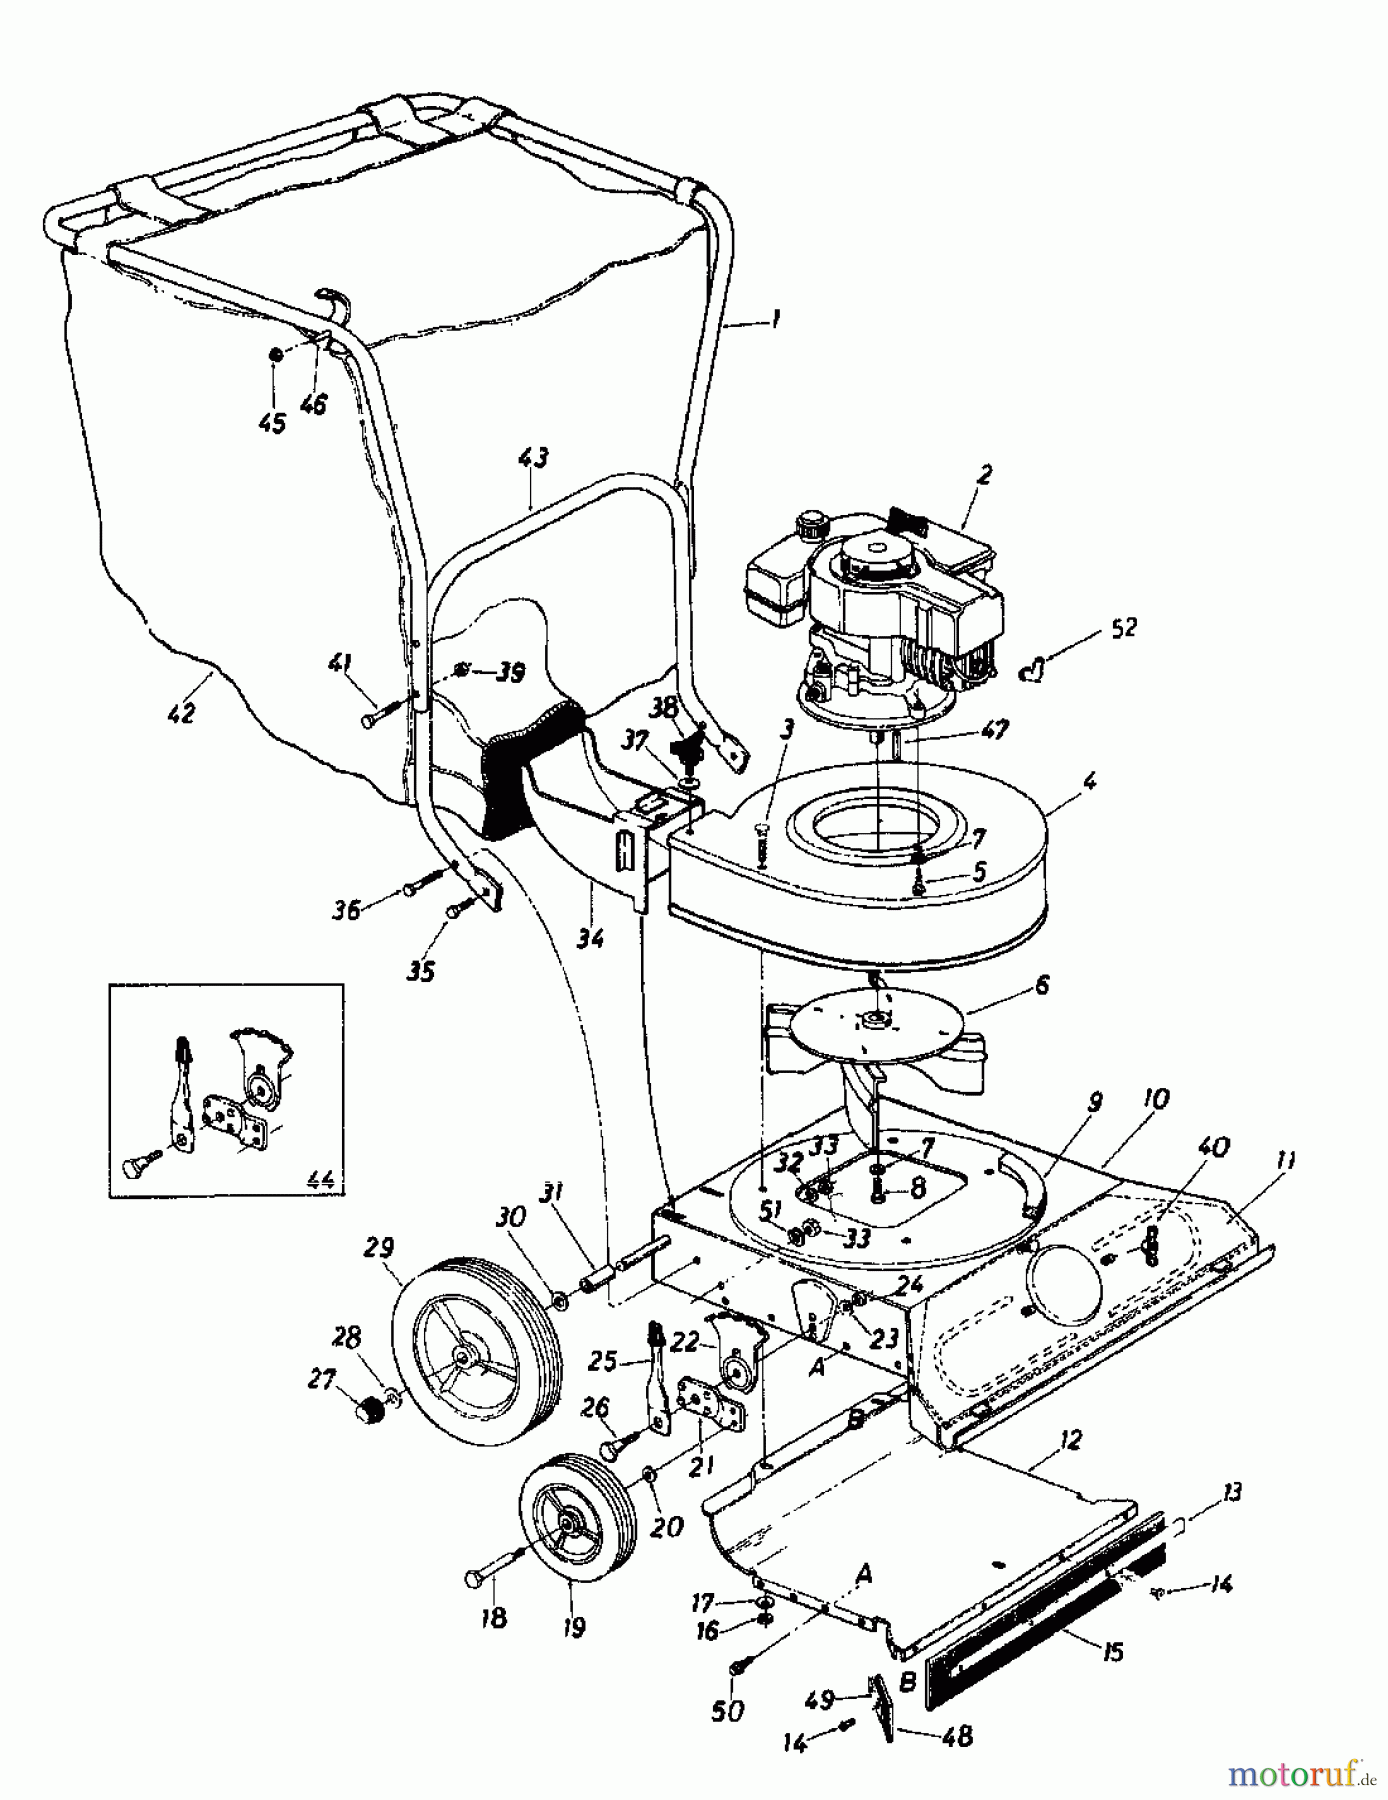  MTD Leaf blower, Blower vac Air-Vac 660 245-6600  (1986) Basic machine